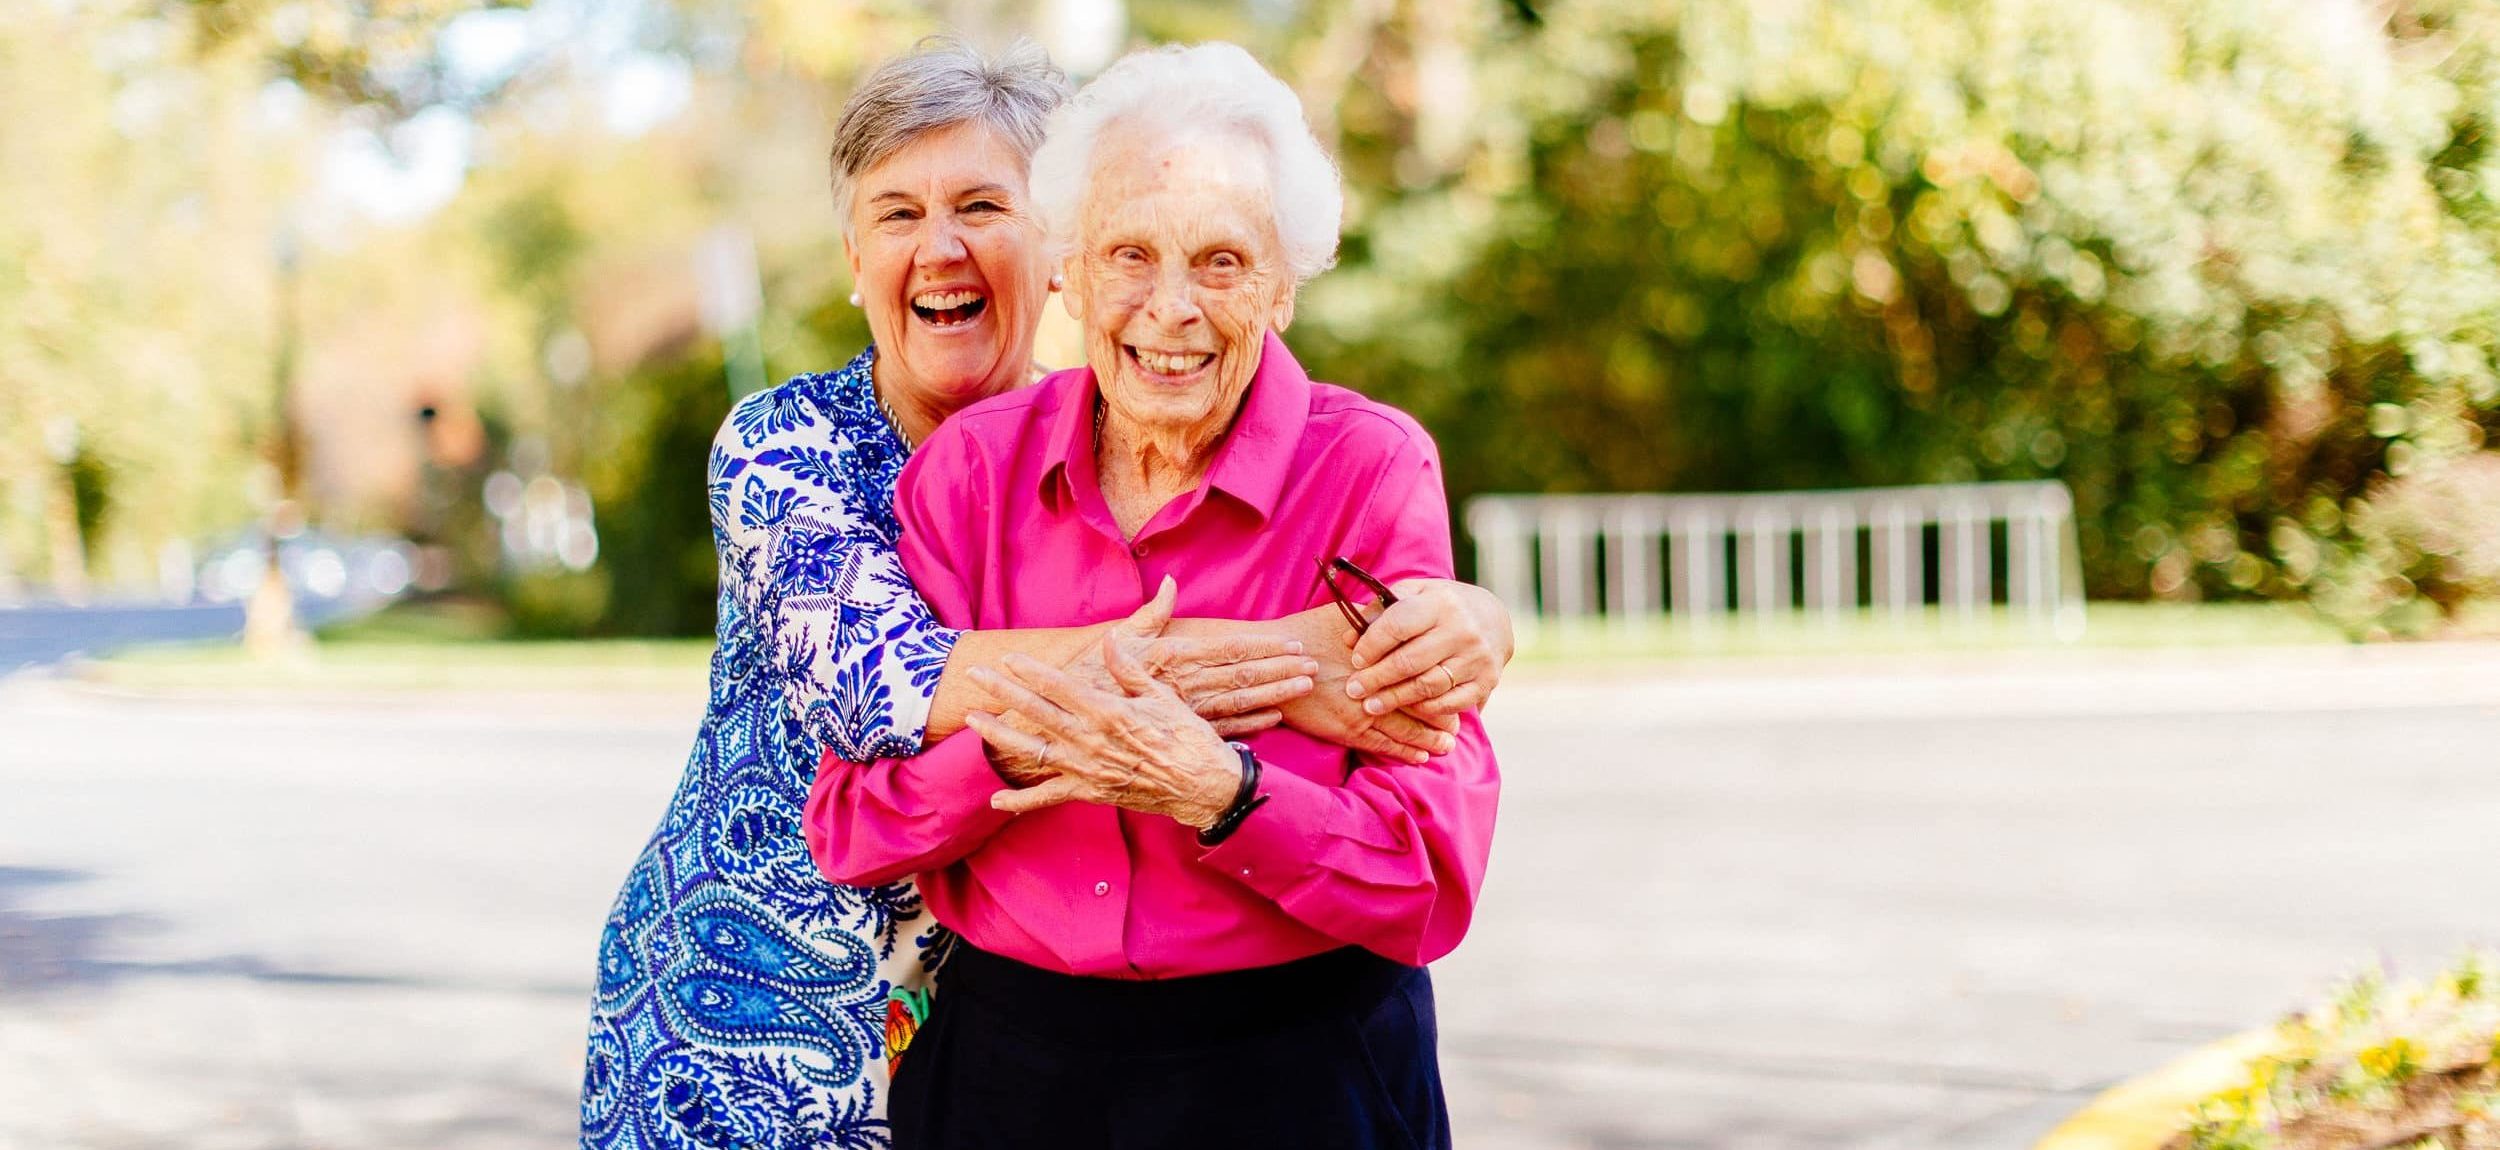 Barb and Independent Living resident at Kensington Park Senior Living enjoy a hug and sunshine